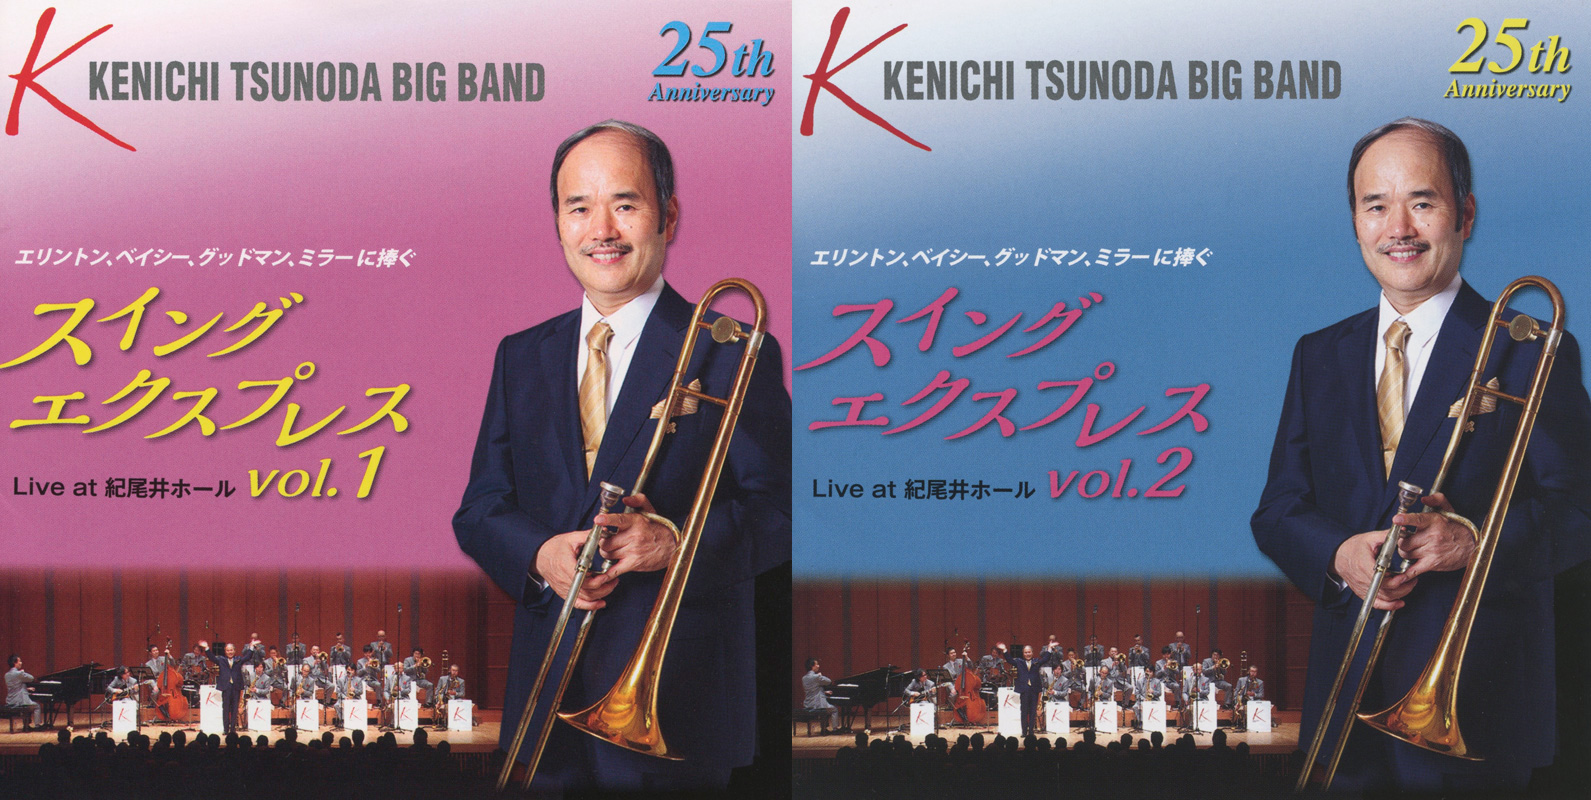 Kenichi Tsunoda Big Band – Swing Express: Volume 1 & Volume 2 (2015) [Japan] SACD ISO + Hi-Res FLAC